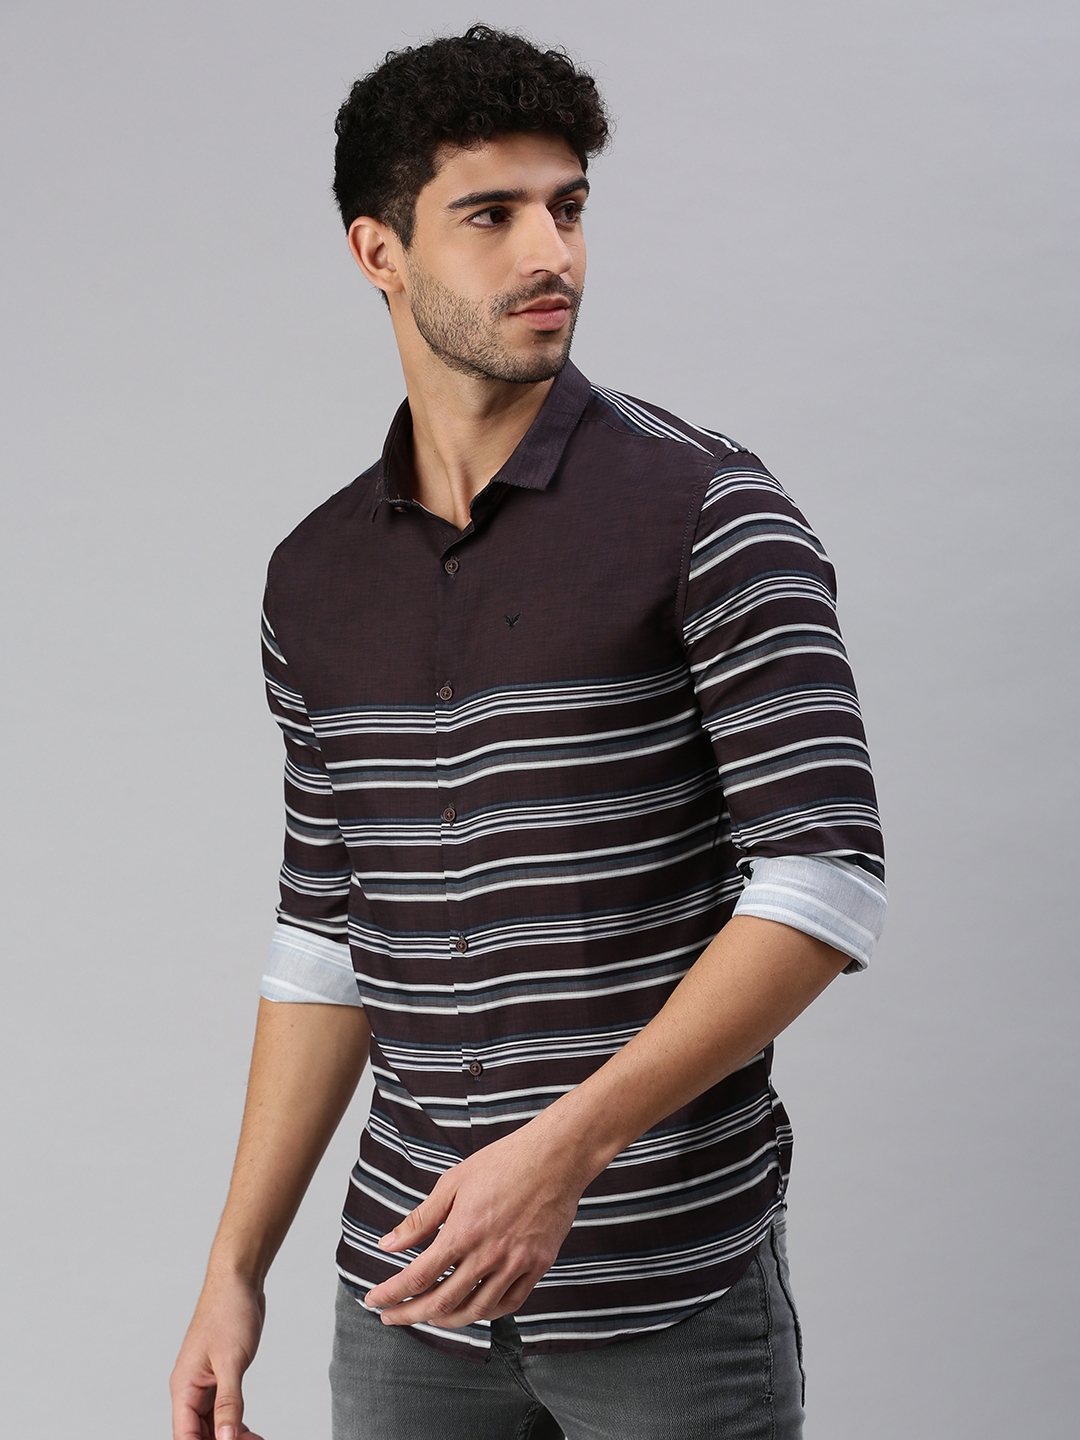 Men's Black Cotton Striped Casual Shirts